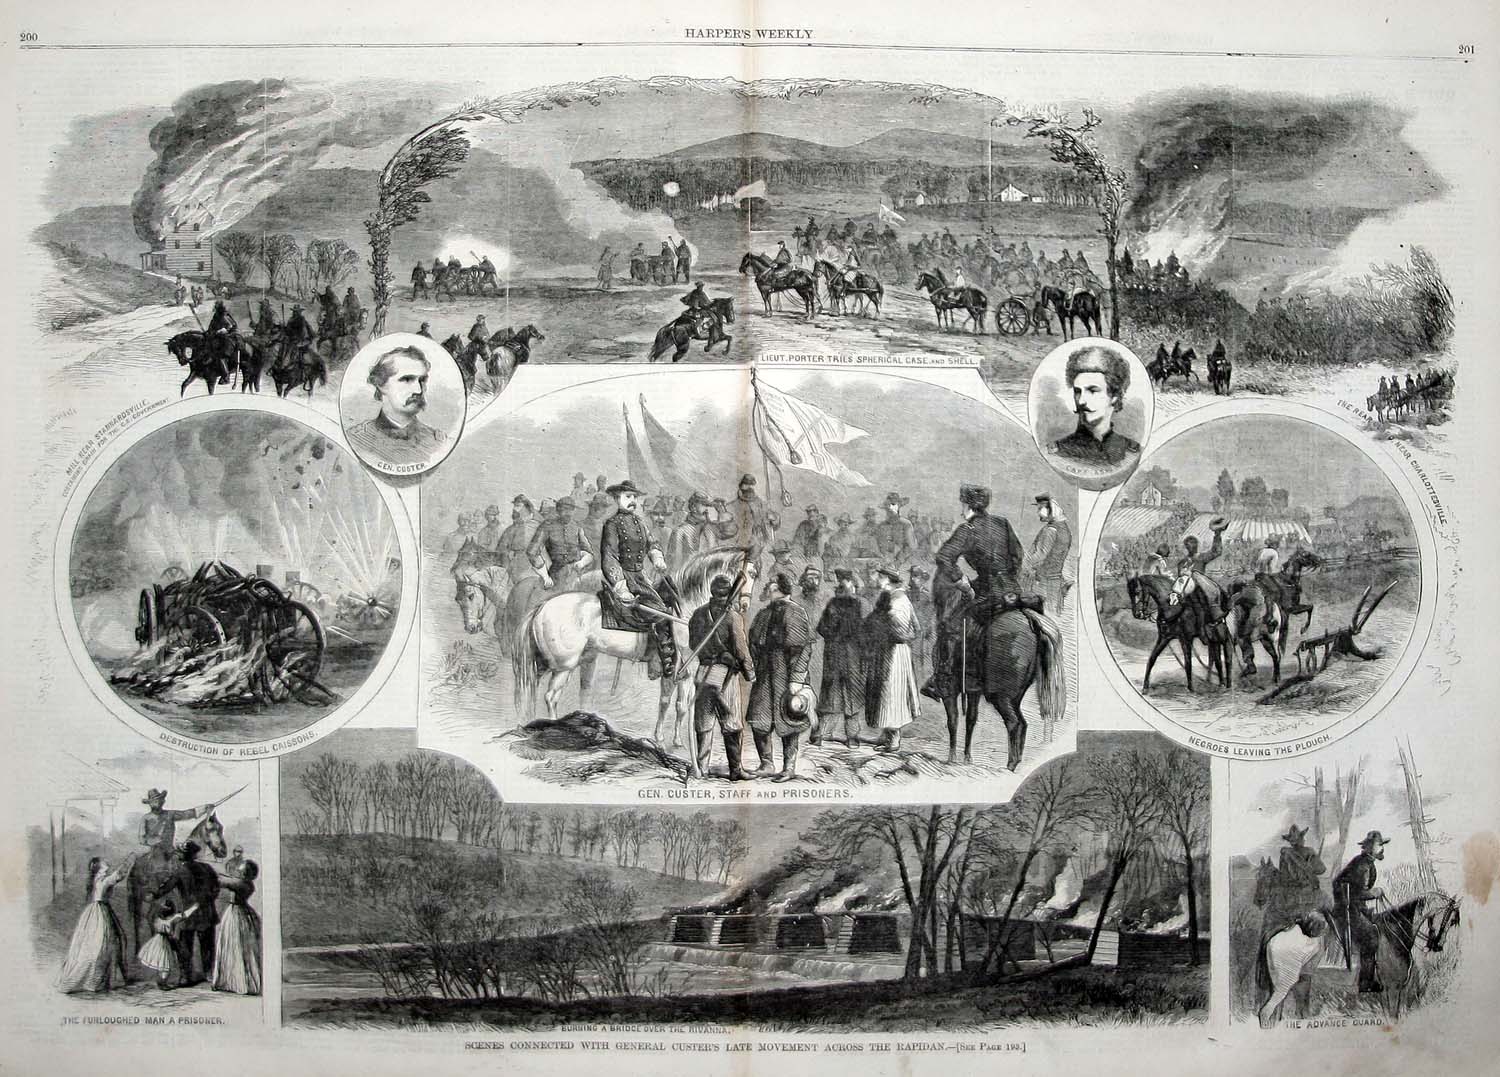 Custer's Raid